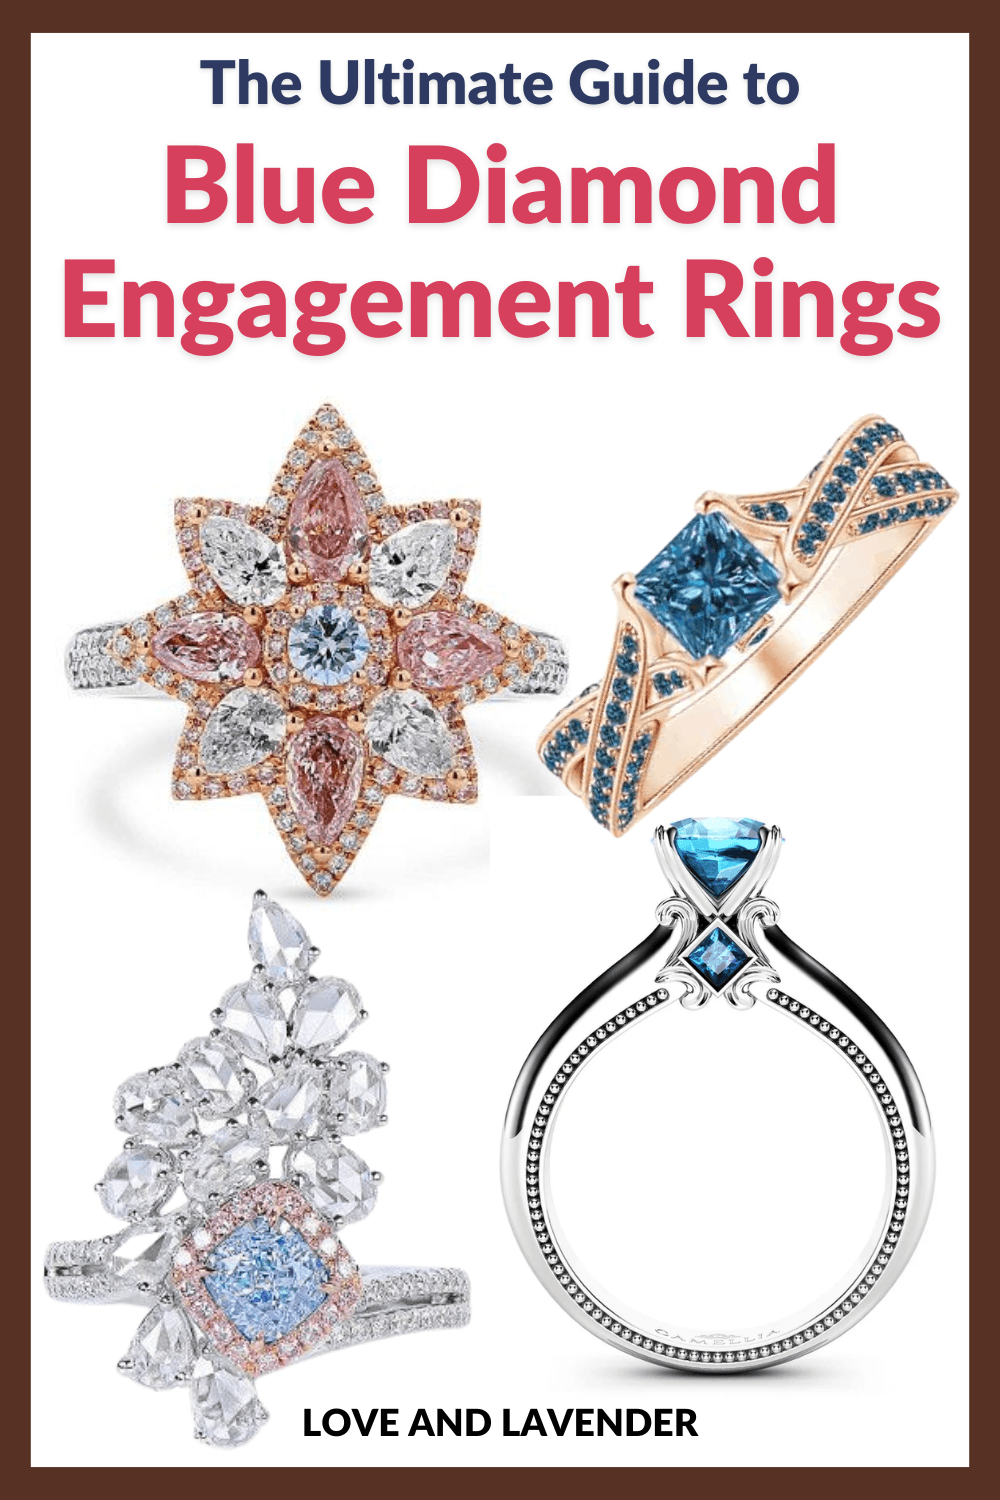 9 Enchanting Blue Diamond Rings for a Bling of \